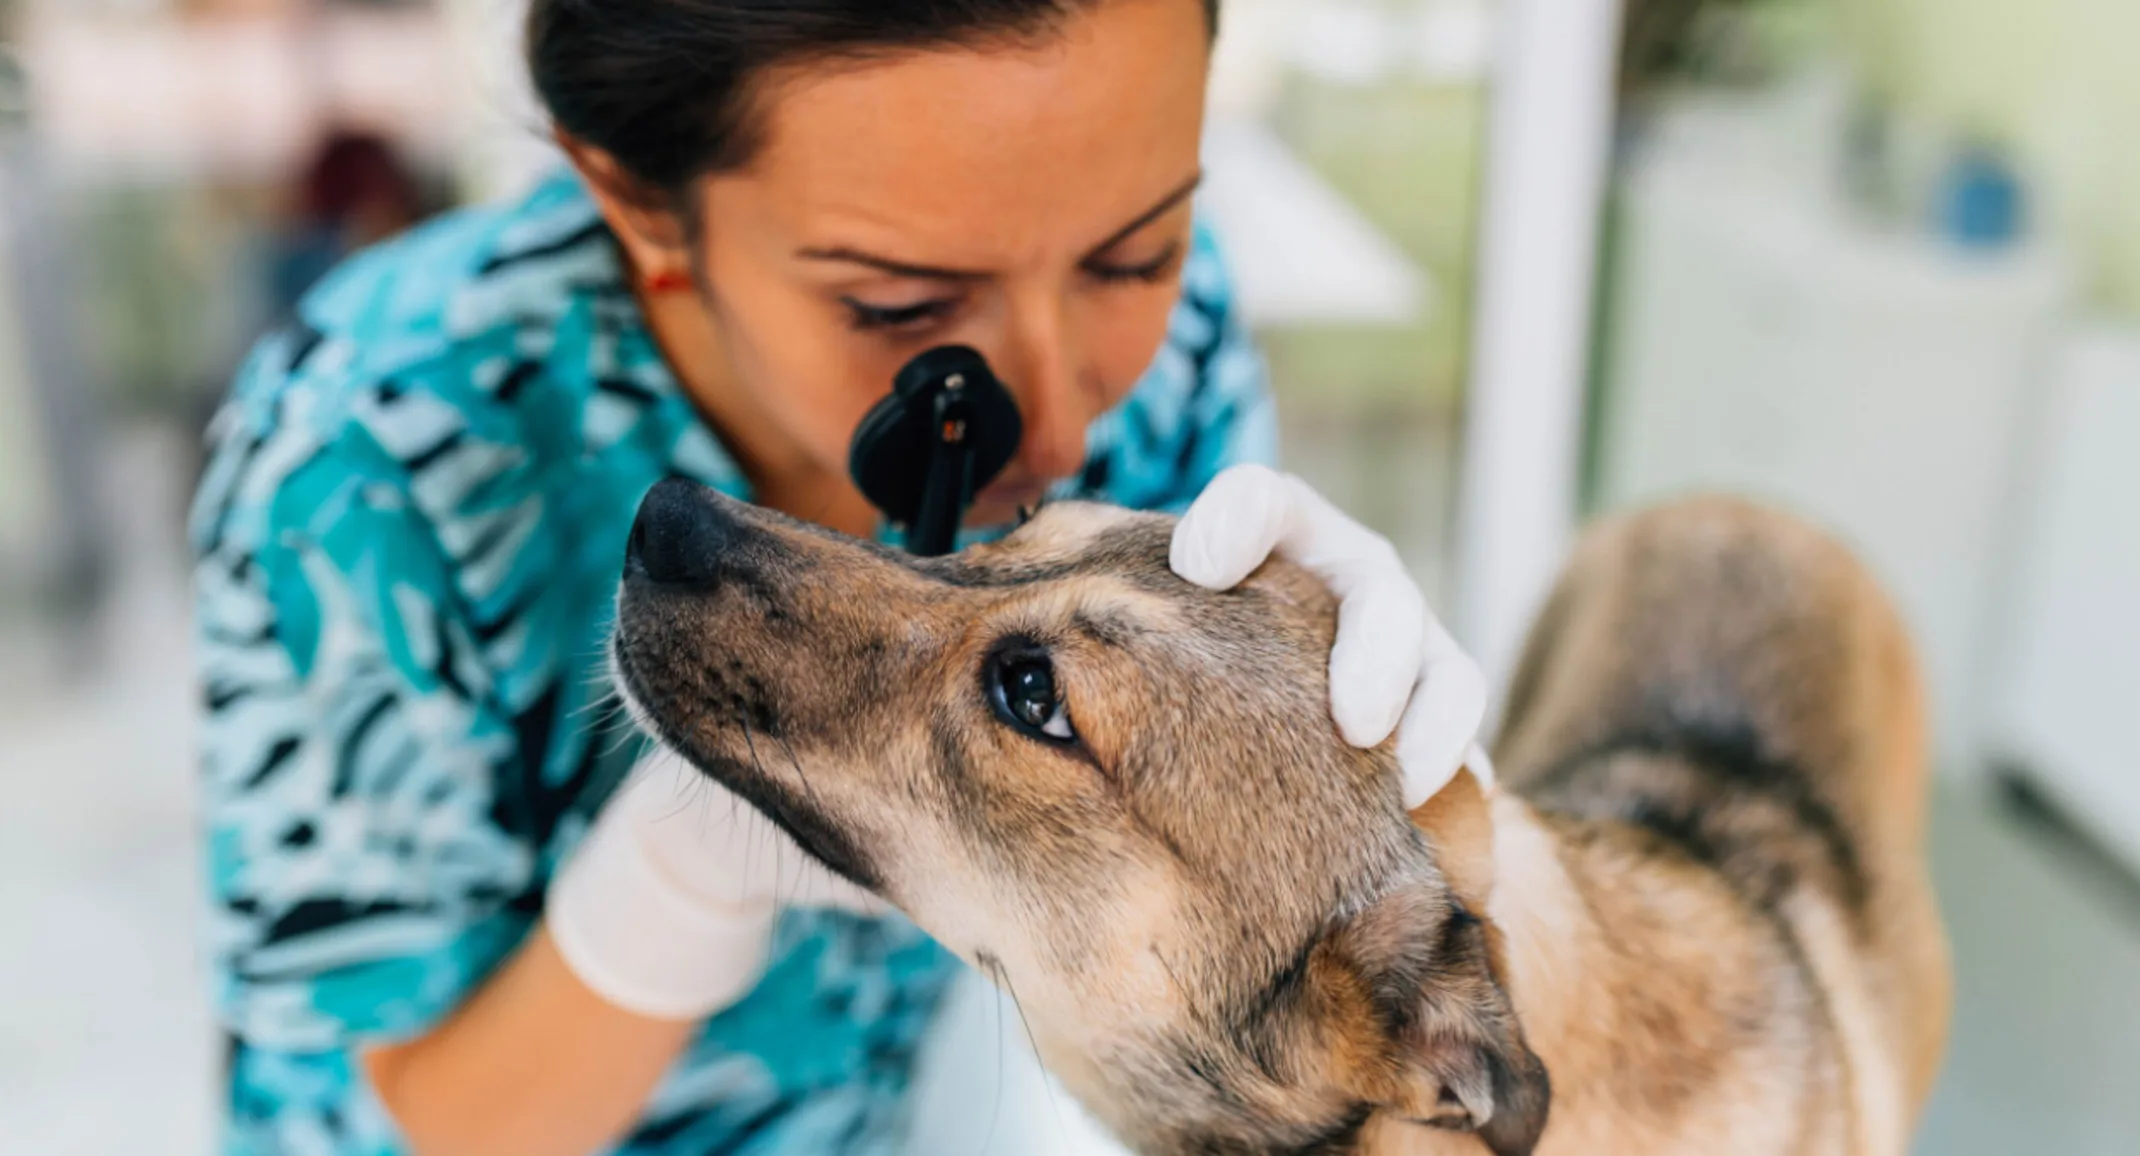 Doctor examining a dog's eye